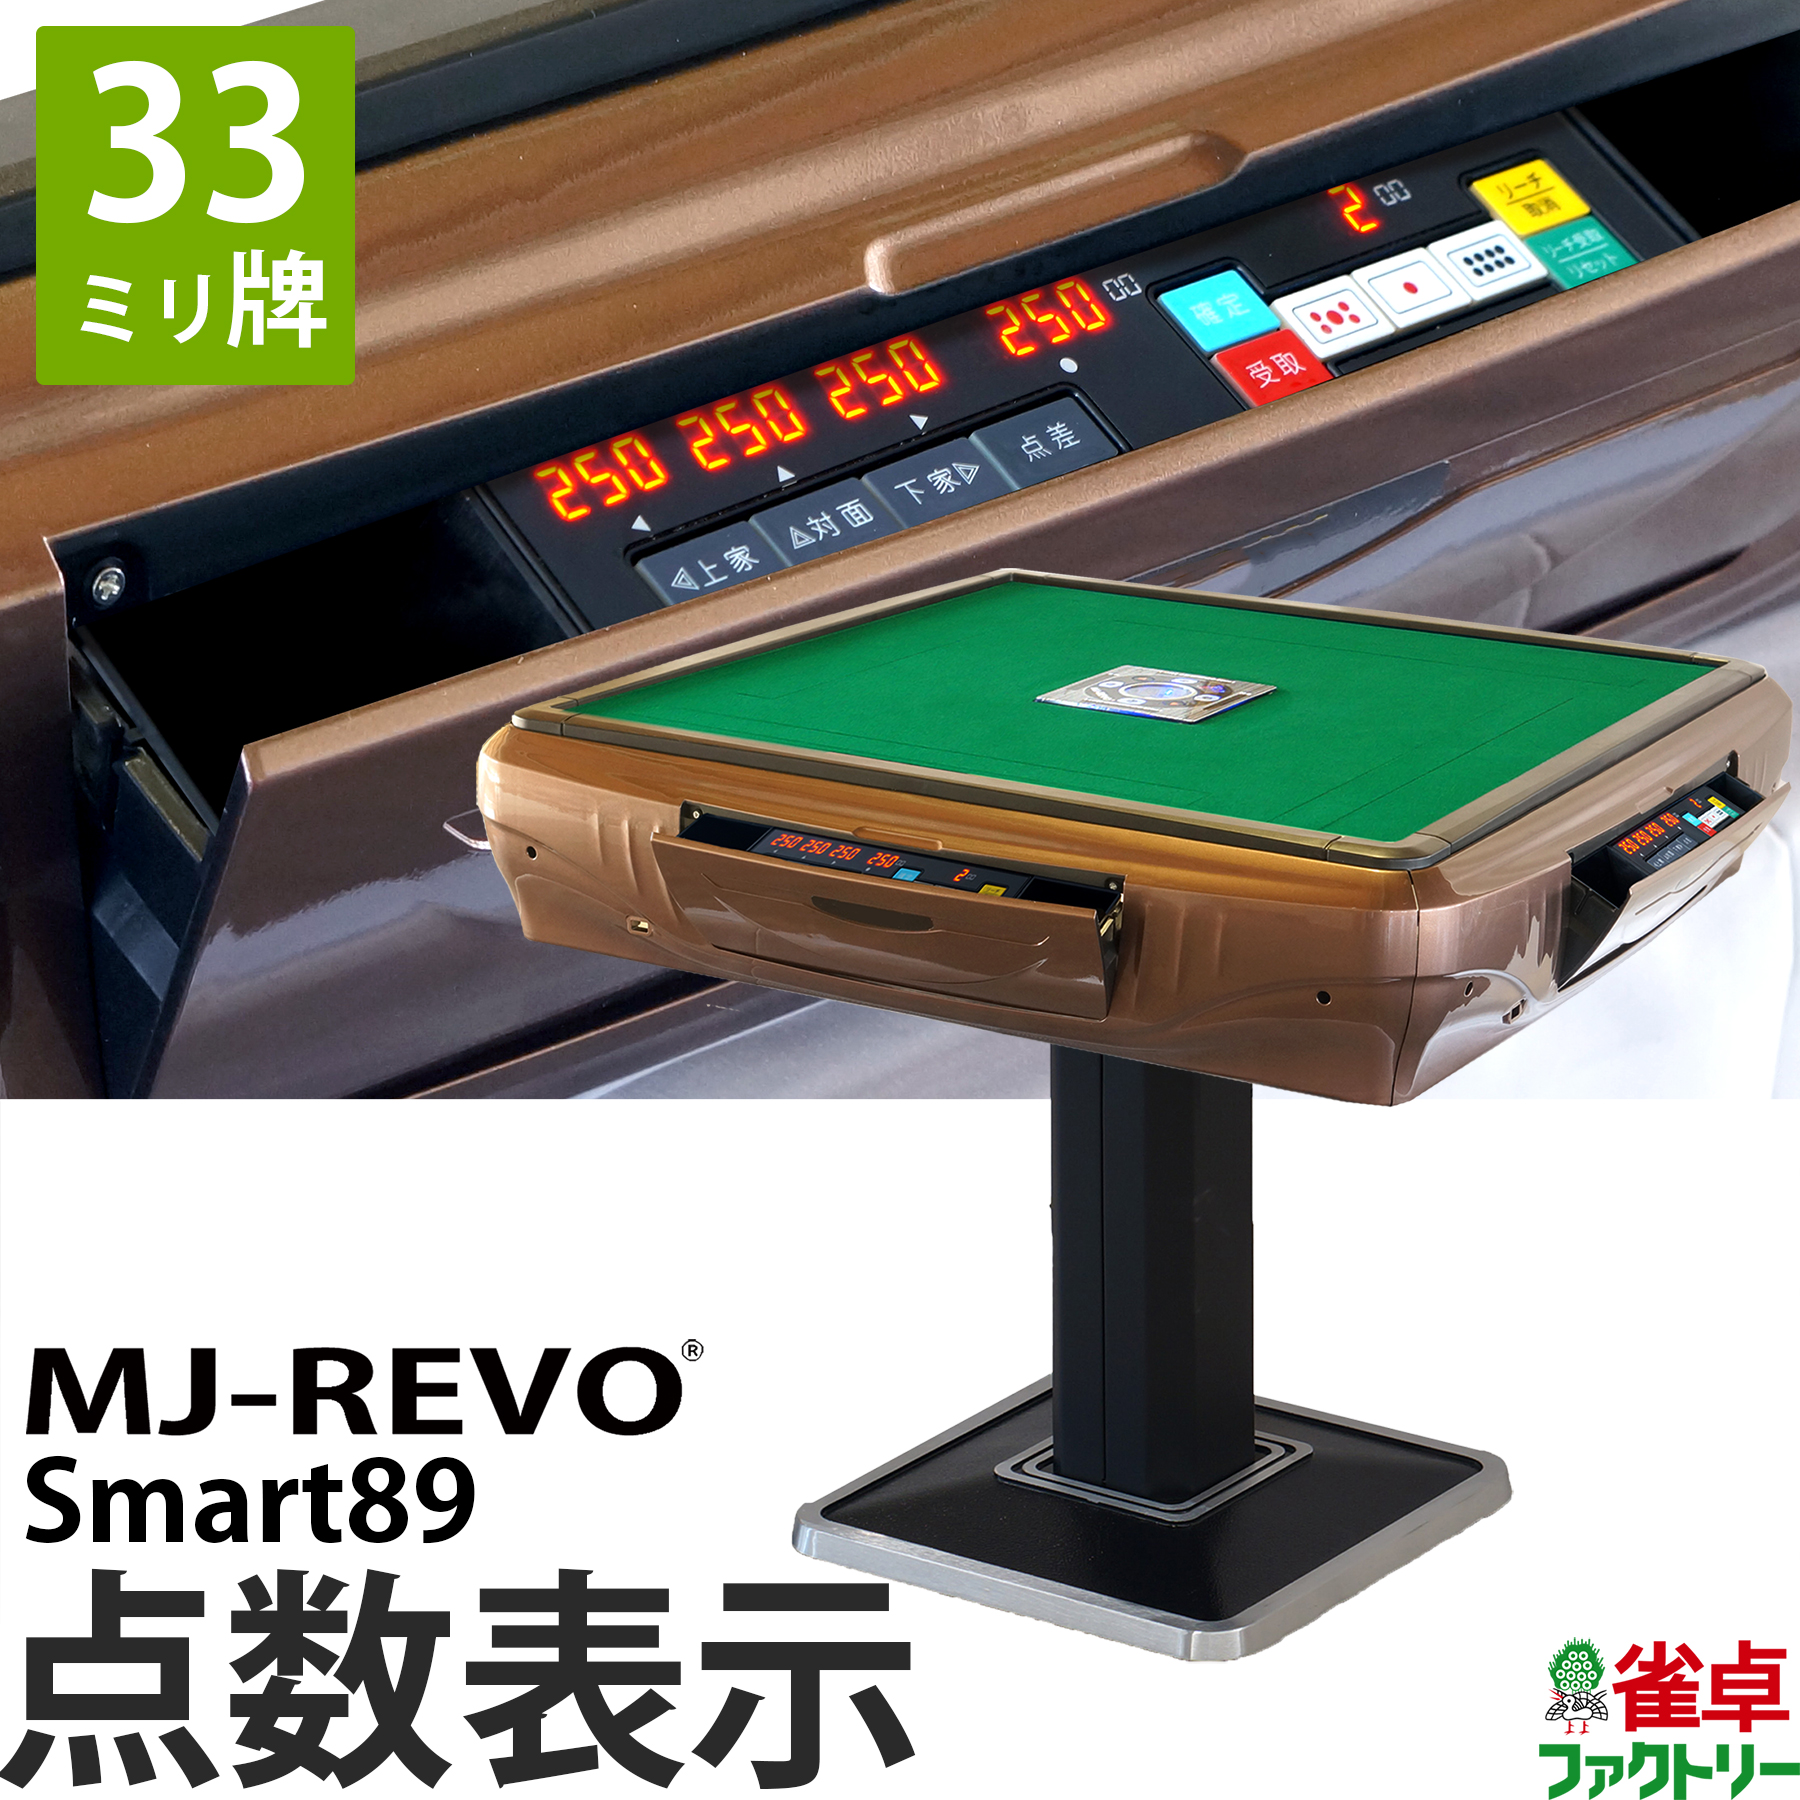 84%OFF!】 全自動麻雀卓 点数表示 MJ-REVO Smart89 33ミリ牌 3